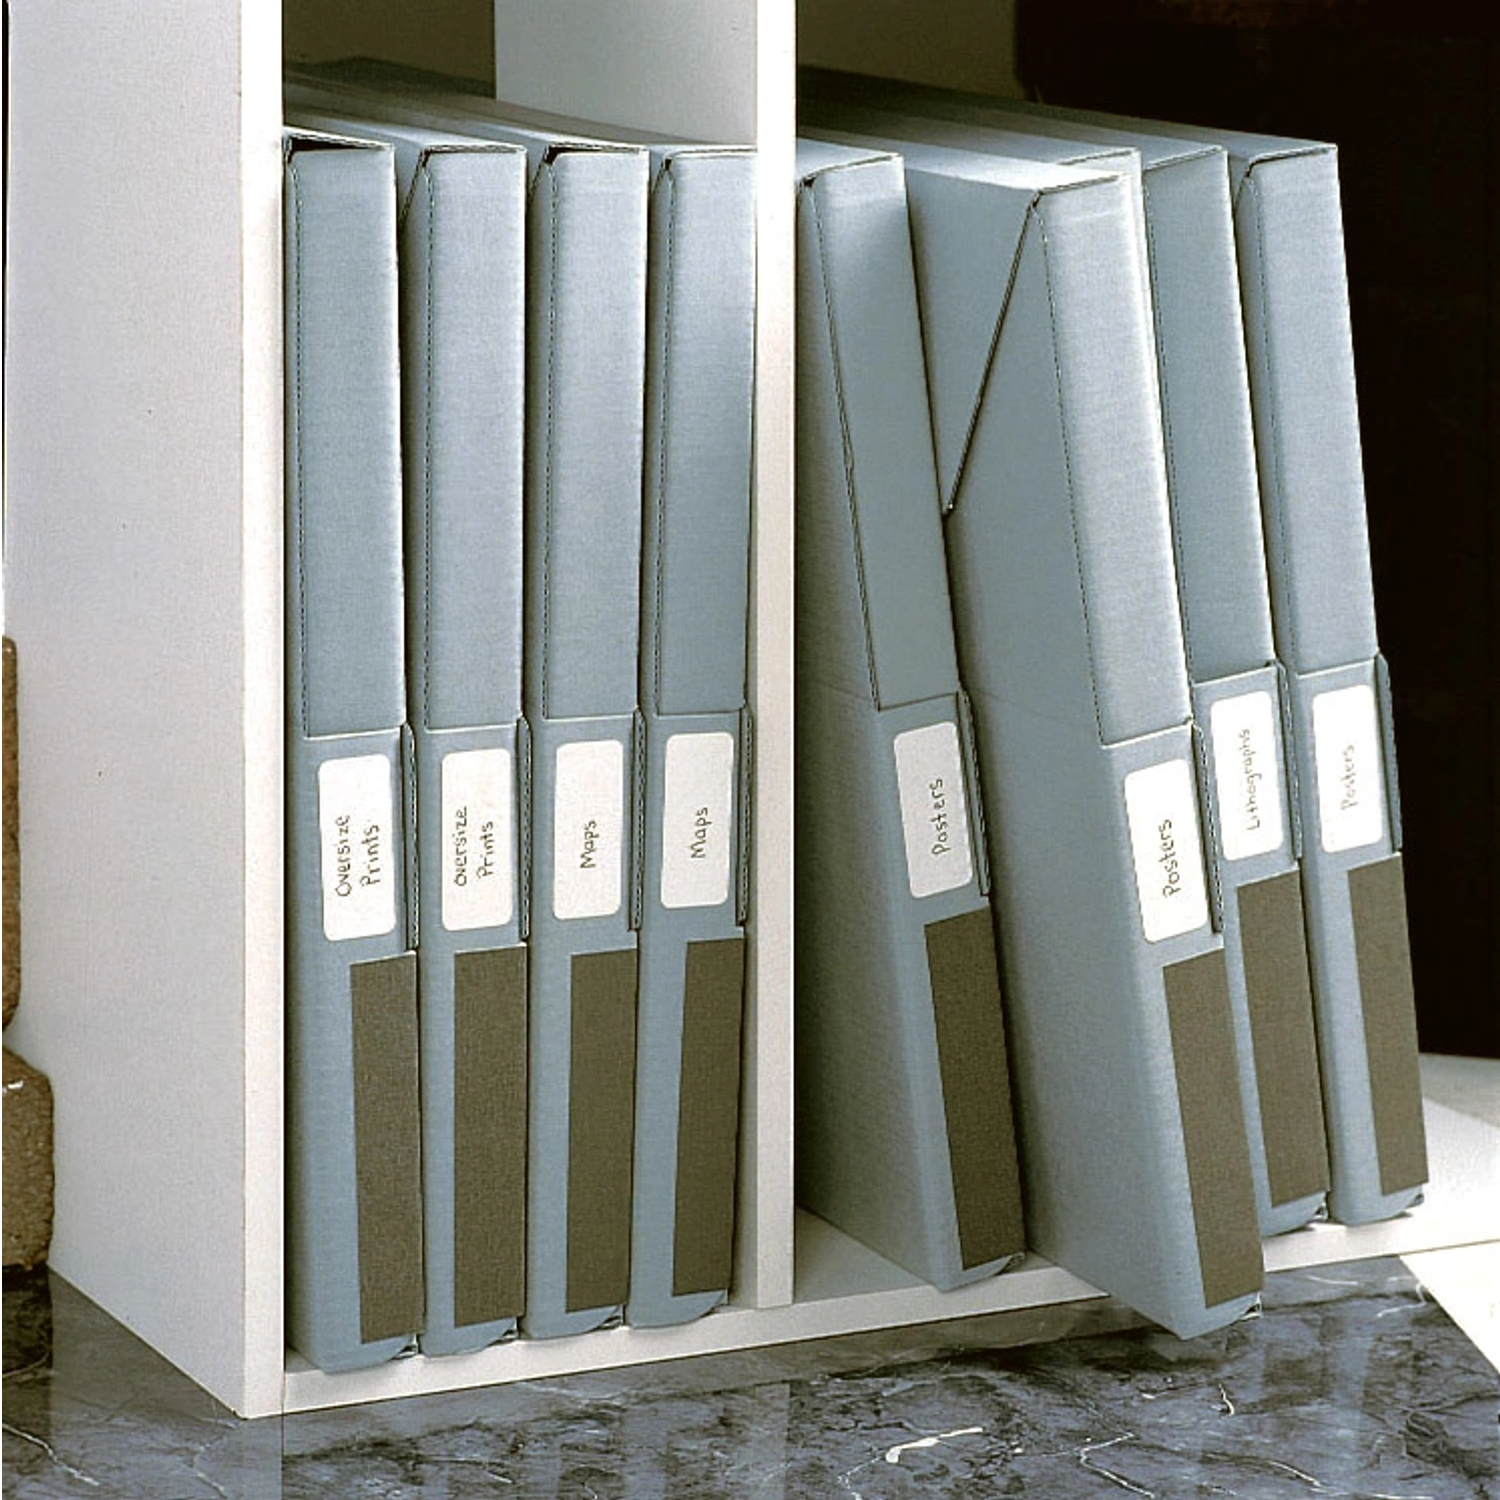 Gaylord Archival® Blue B-flute Poster Storage Kit, Kits